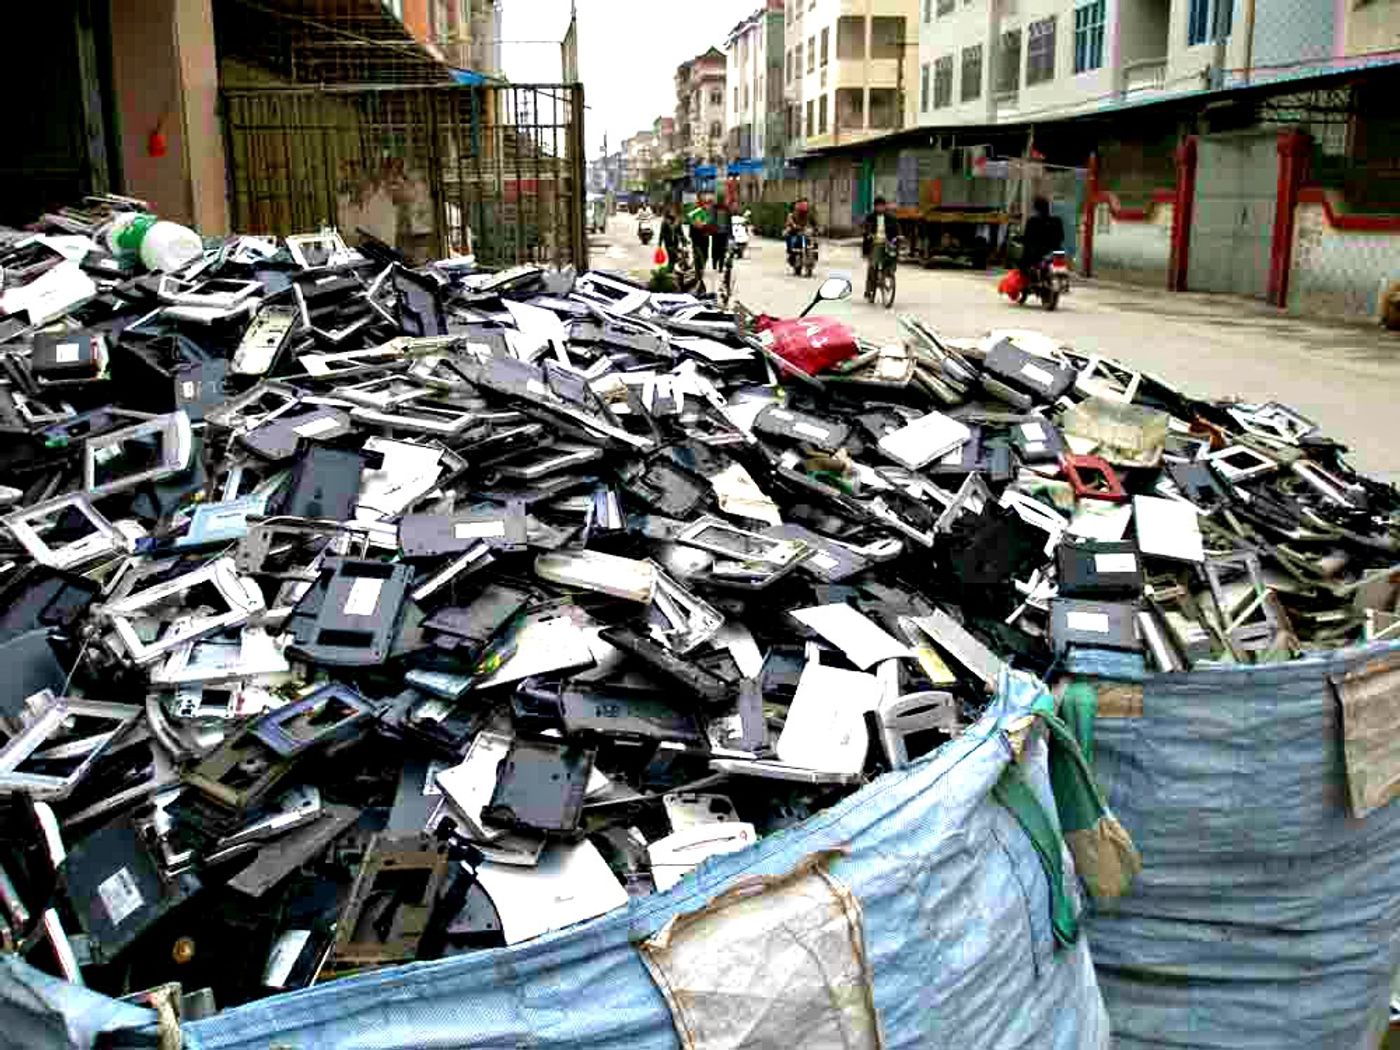 e-waste, credit: manowar064 on Flickr